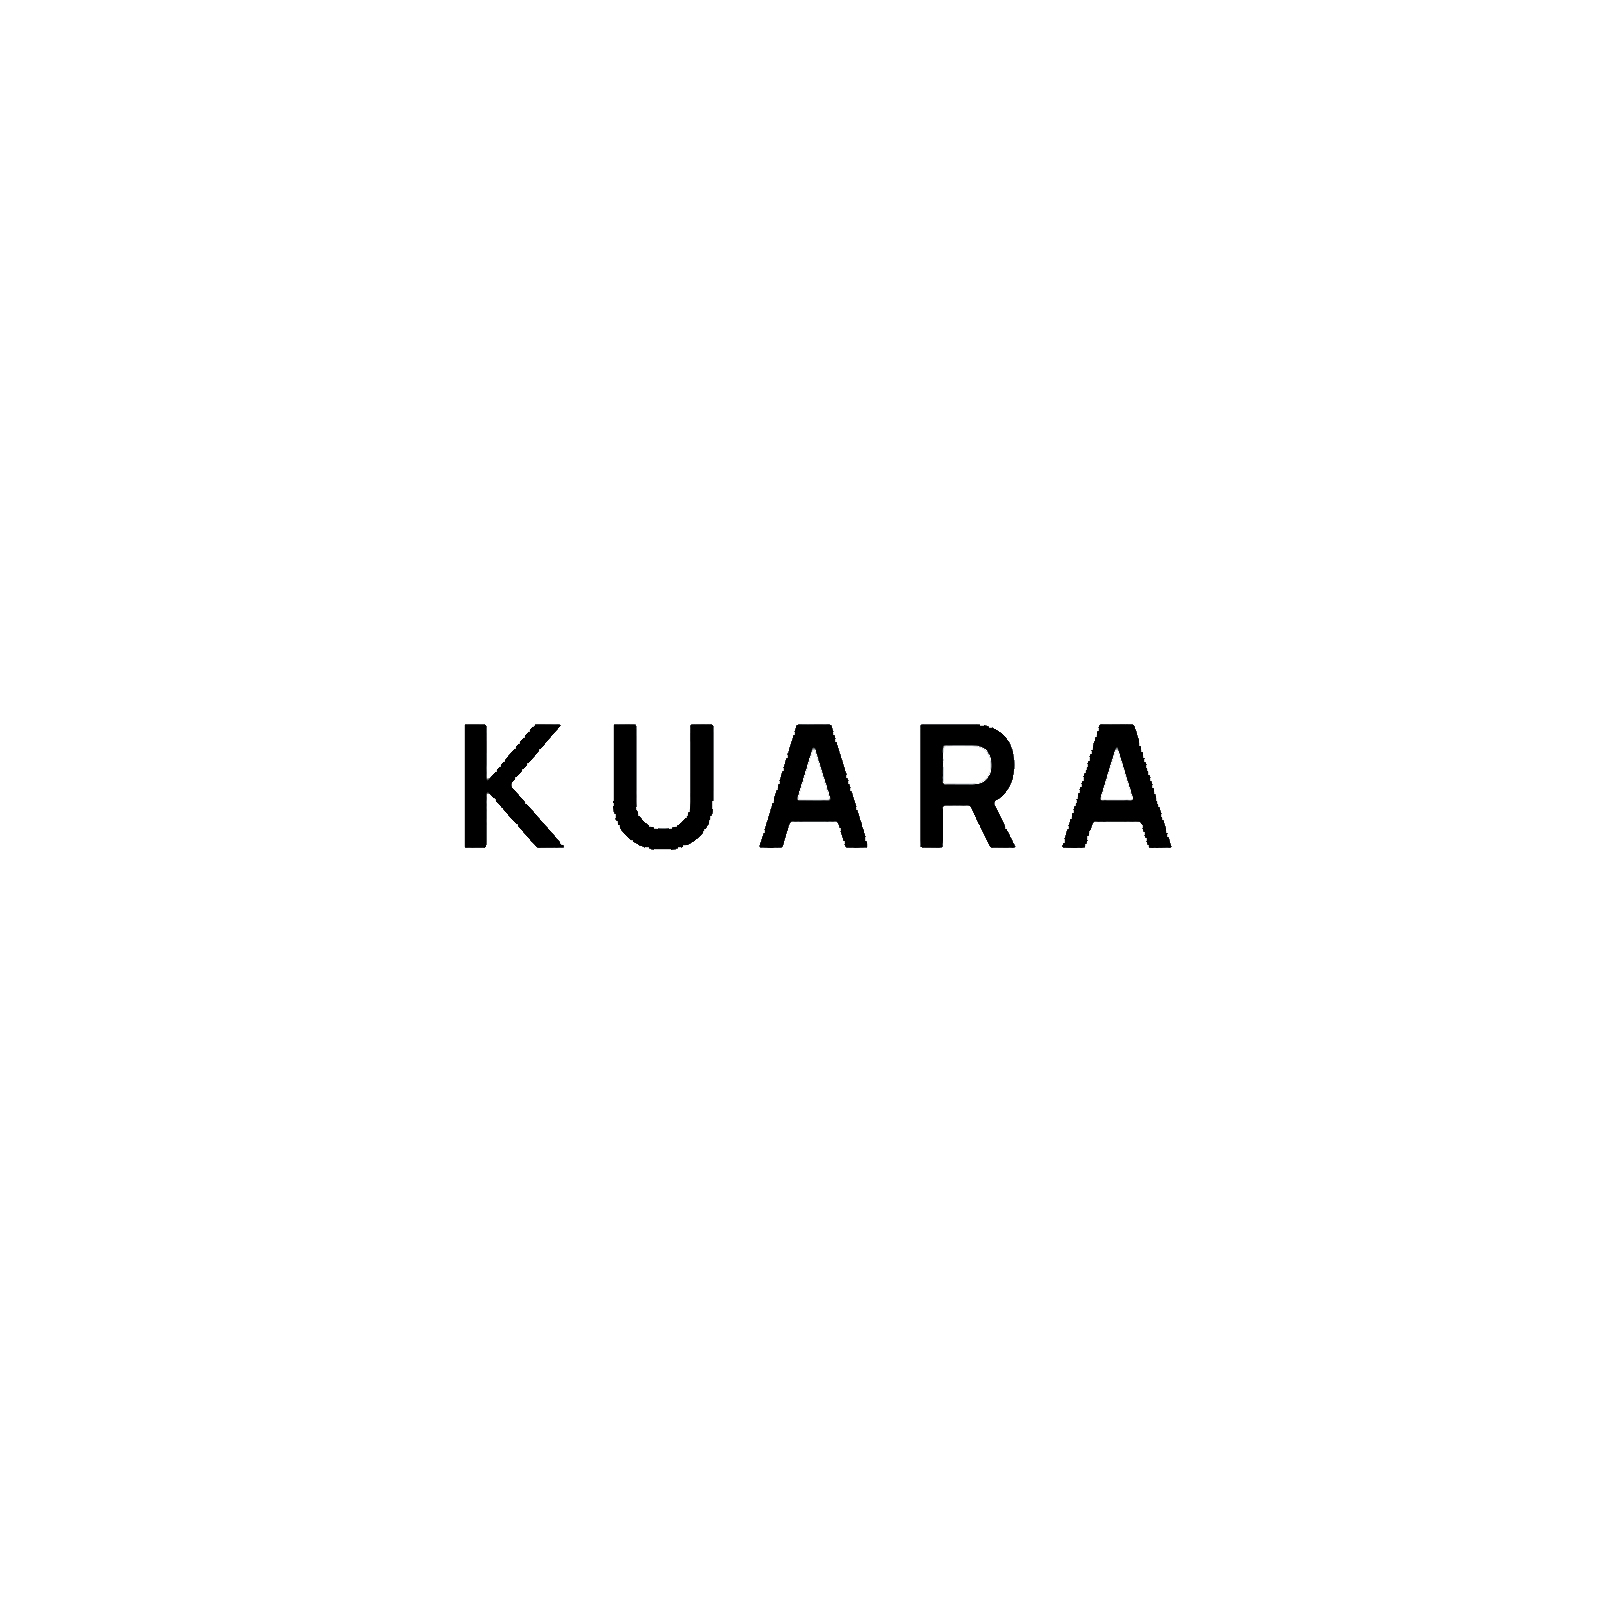 kaura